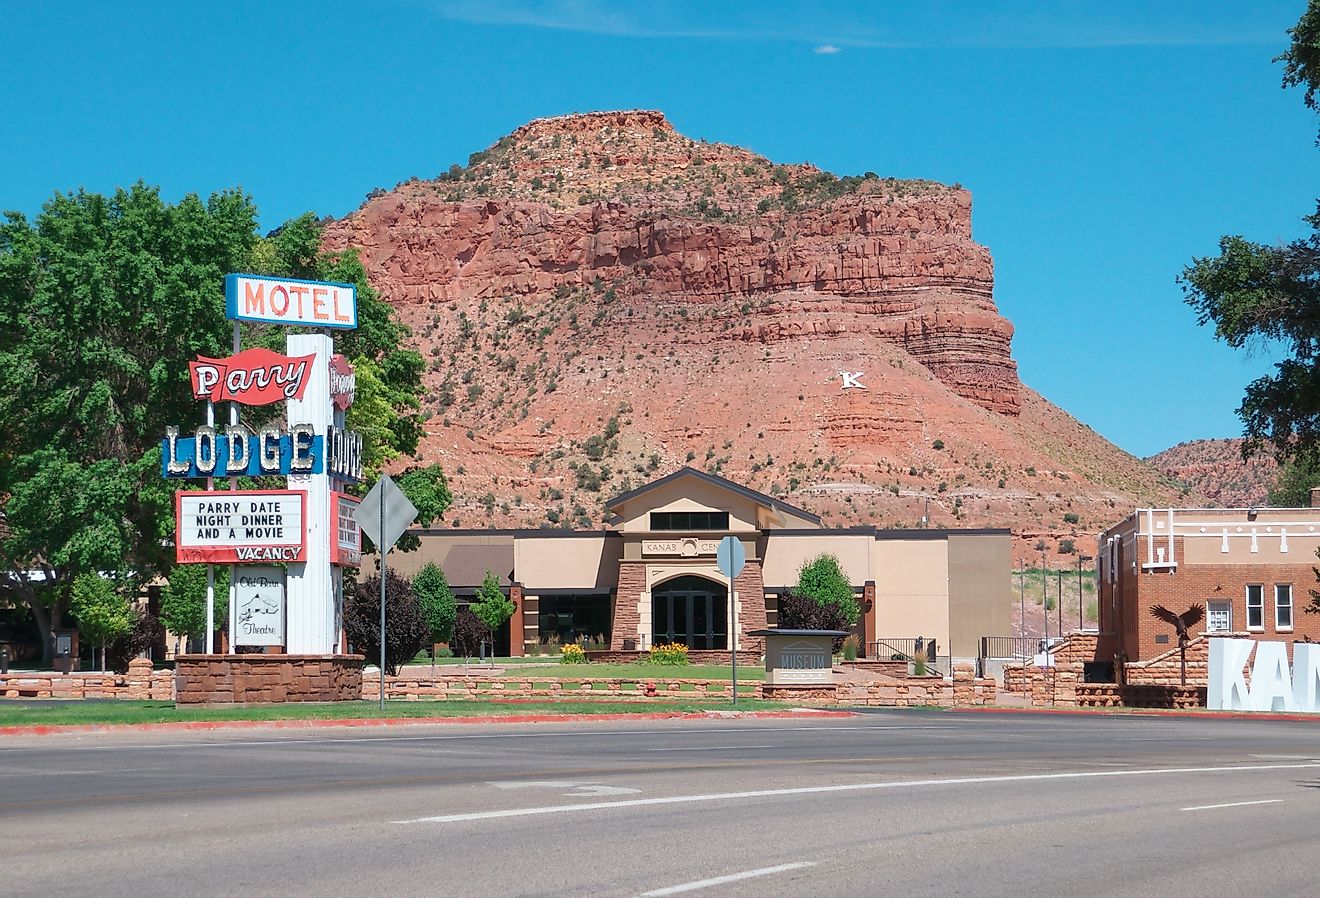 Parry lodge sign, the mountain and Kanab sign in Kanab, Utah. Image credit Christophe KLEBERT via Shutterstock